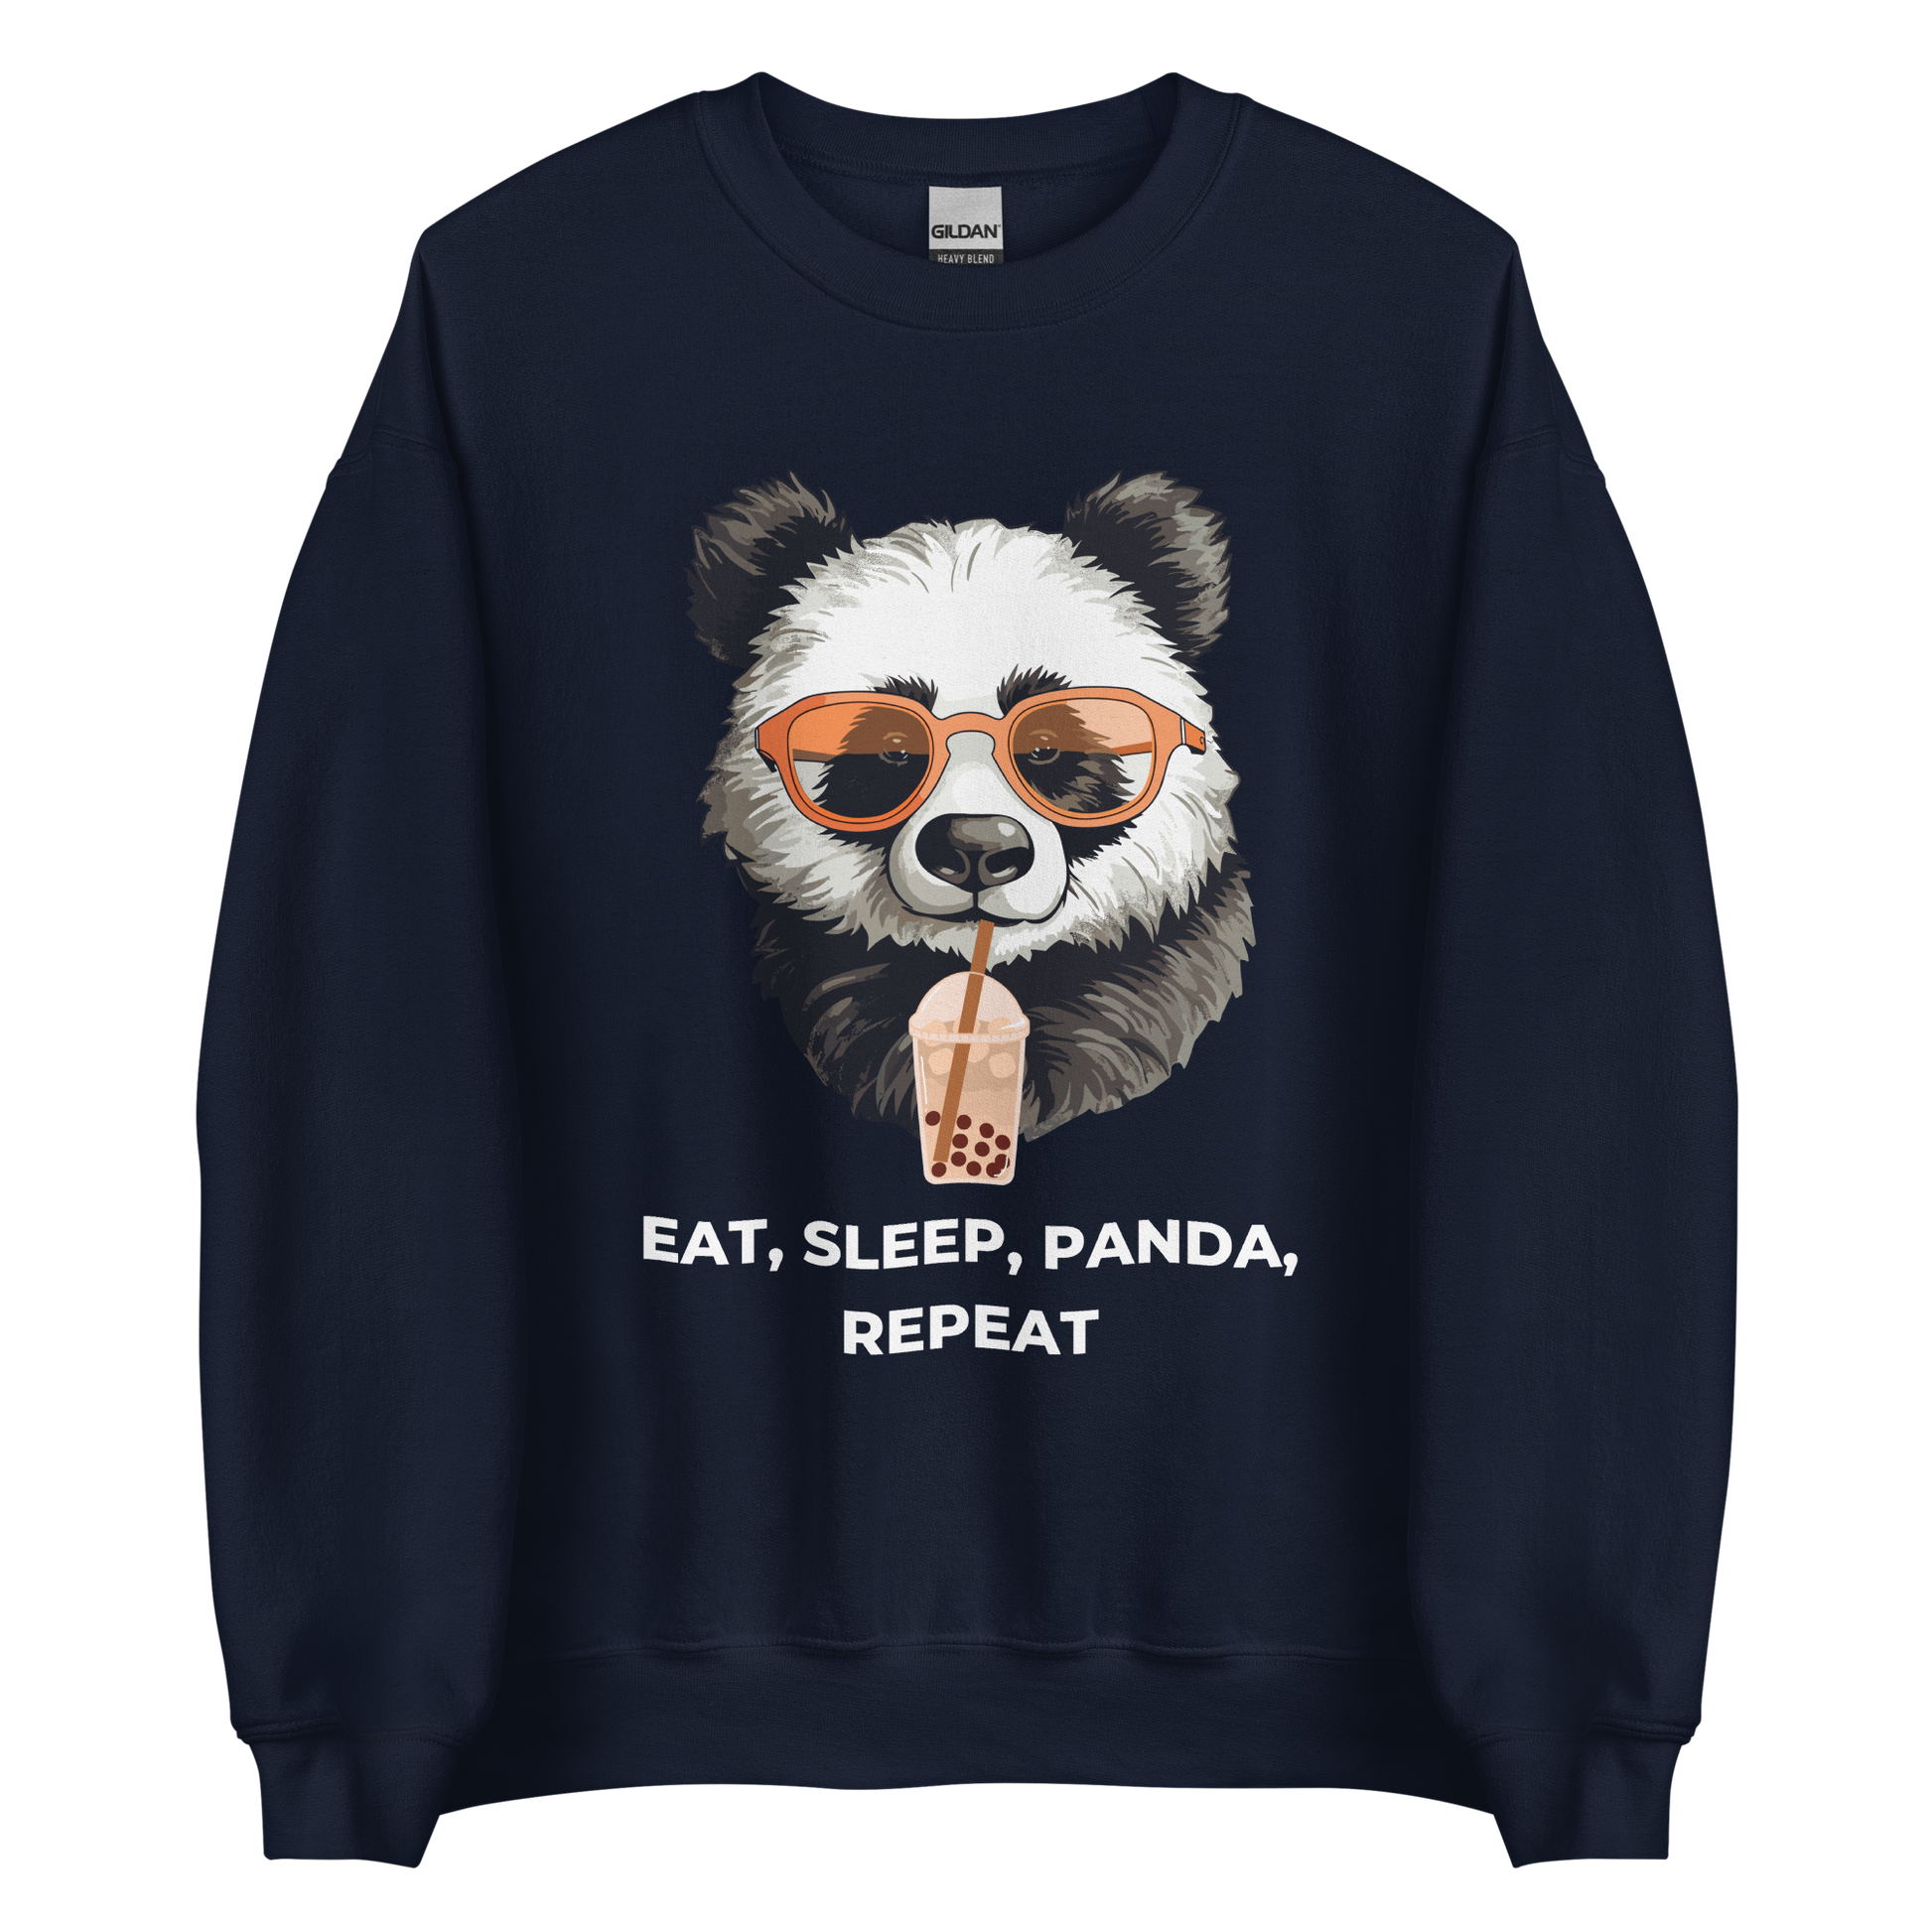 Navy Panda Sweatshirt featuring an adorable Eat, Sleep, Panda, Repeat graphic on the chest - Funny Graphic Panda Sweatshirts - Boozy Fox